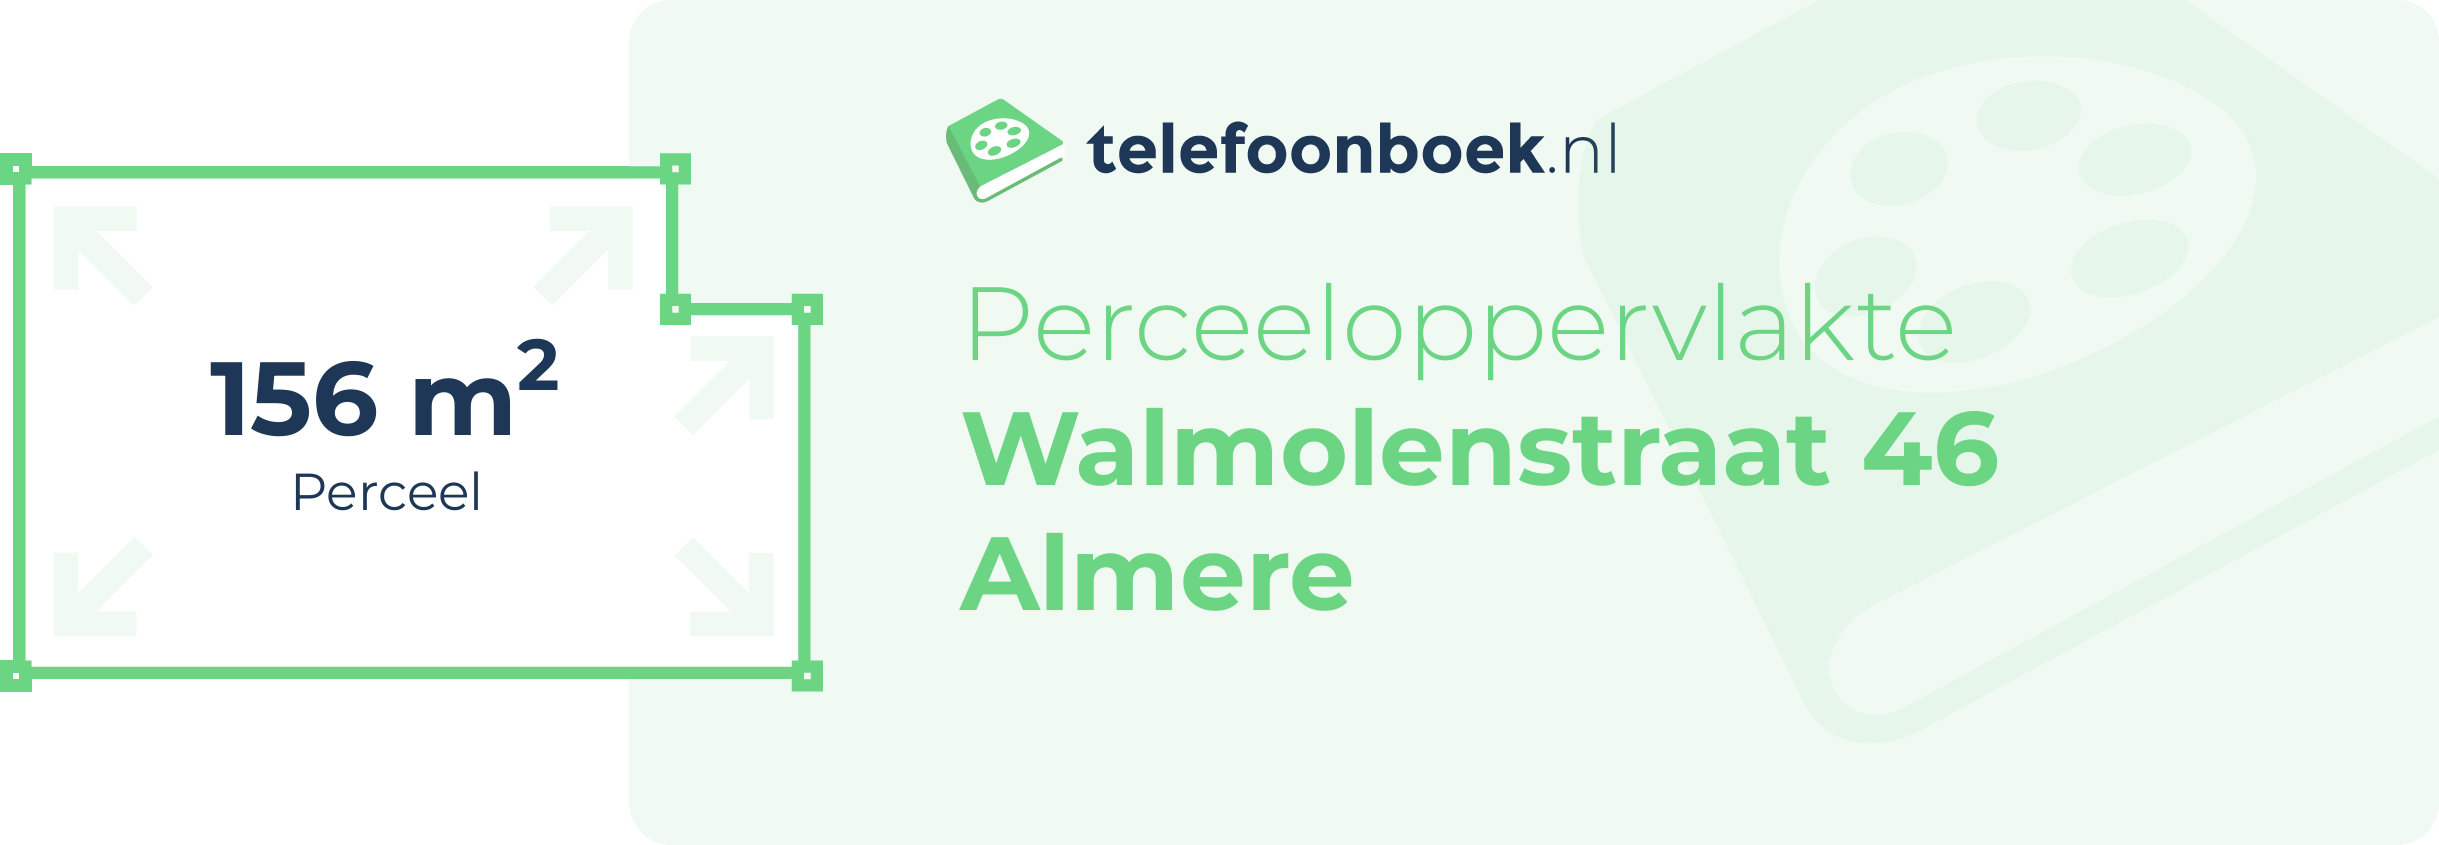 Perceeloppervlakte Walmolenstraat 46 Almere